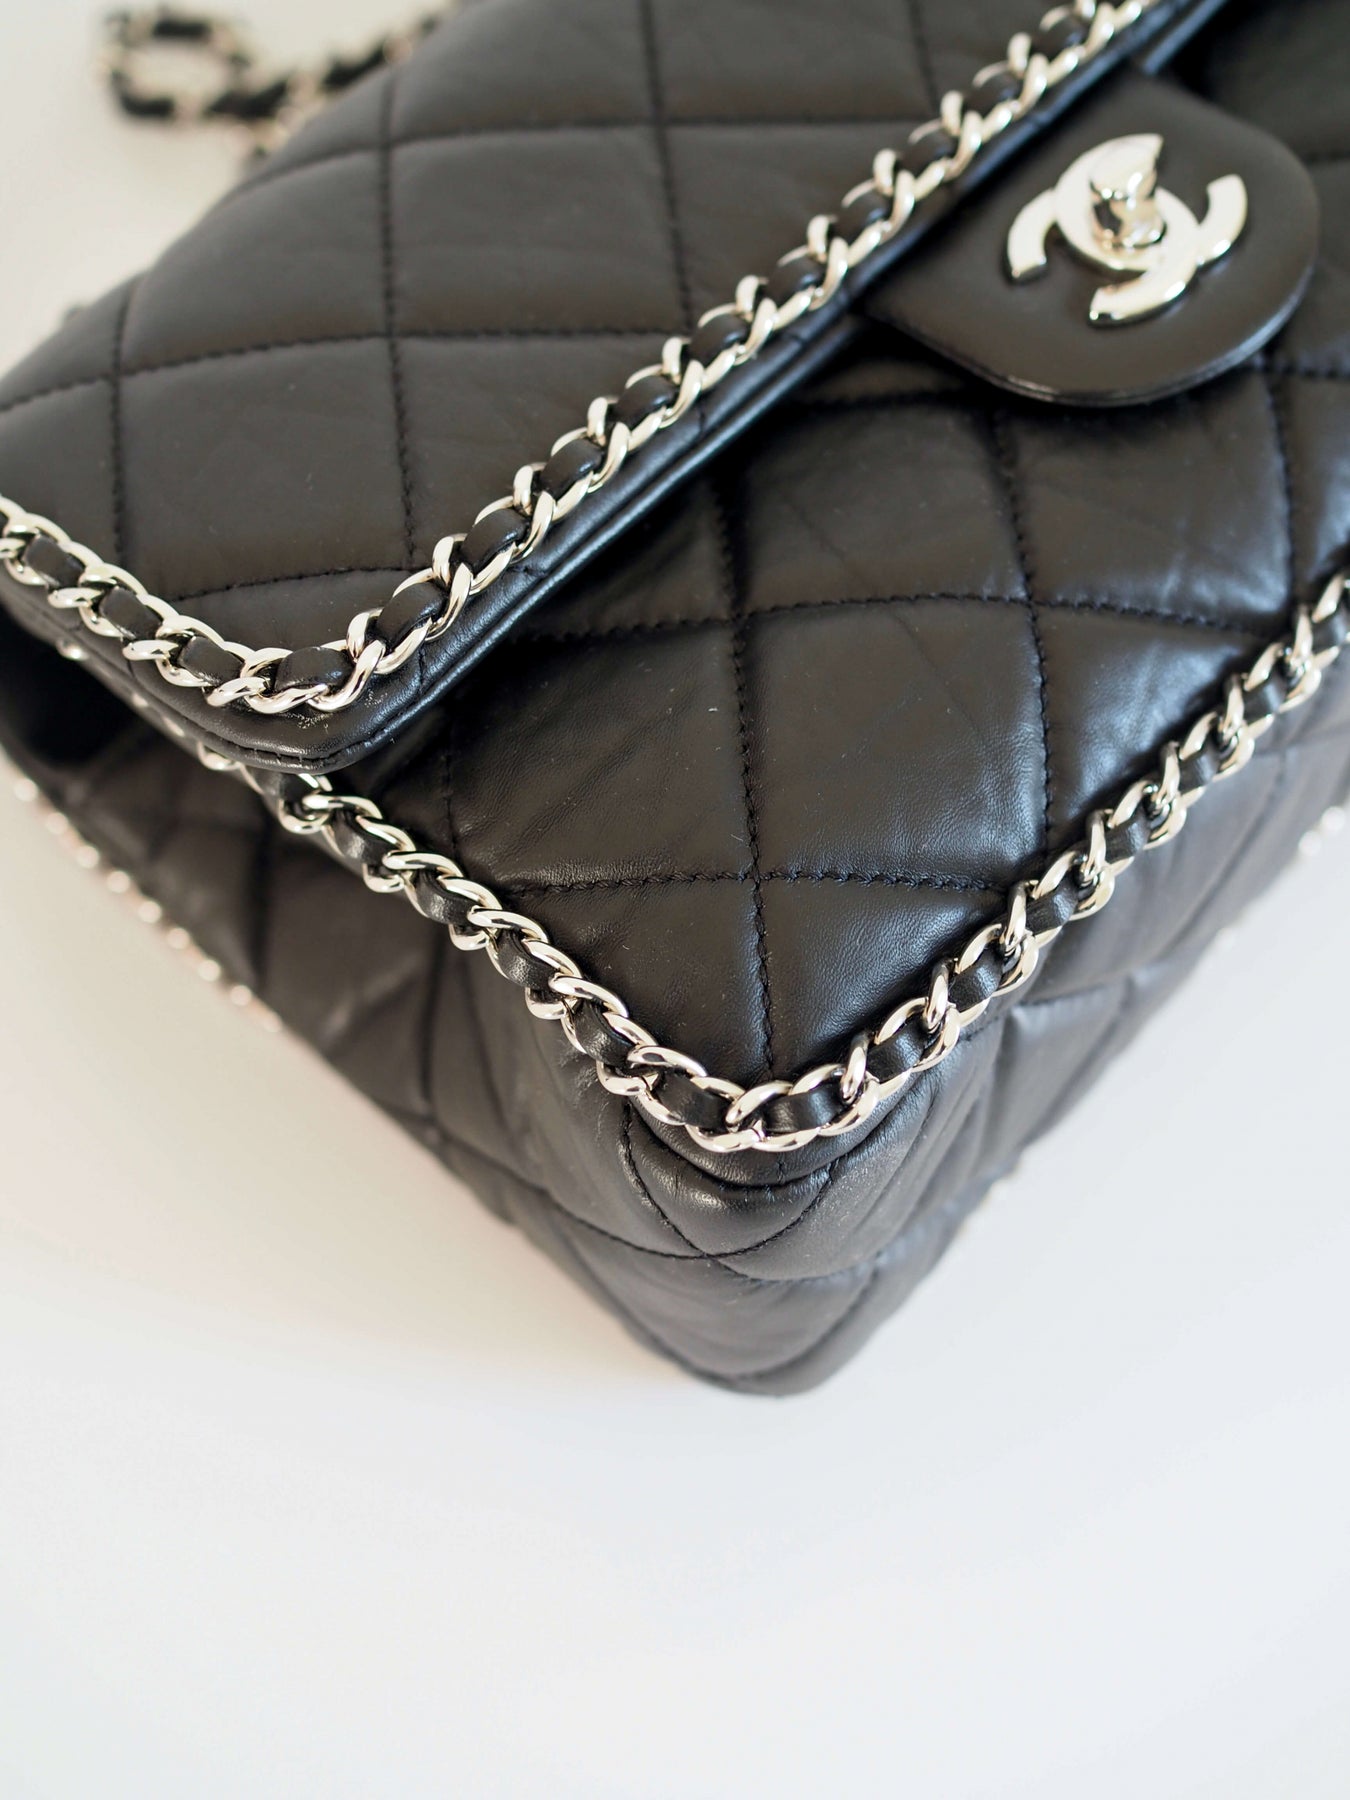 Chanel Crumpled Calfskin Leather Medium Running Chain Around Red Flap Bag